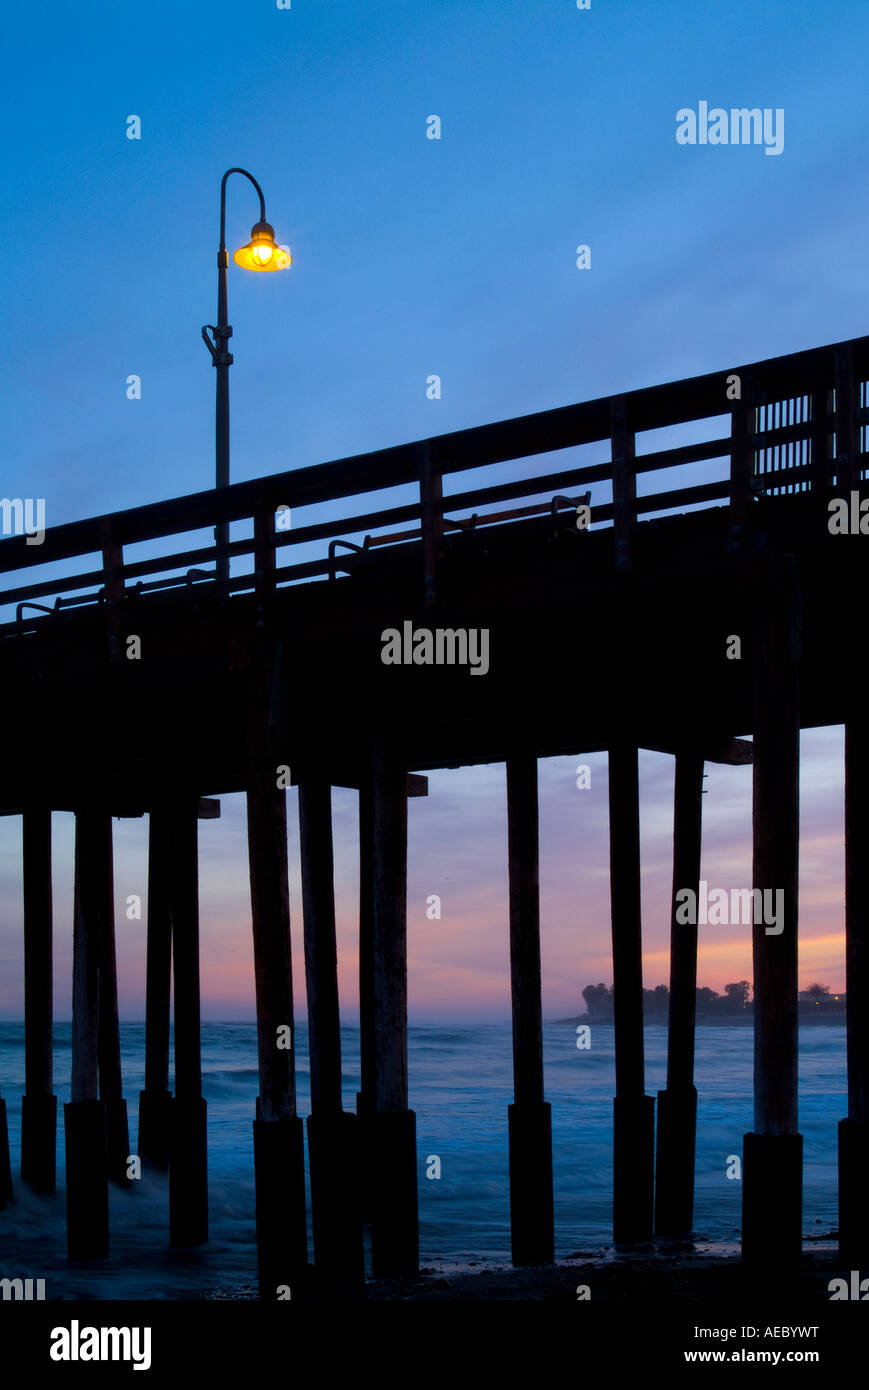 Ventura Pier With Lone Light Post Lamp At Sunset, Ventura California USA Stock Photo